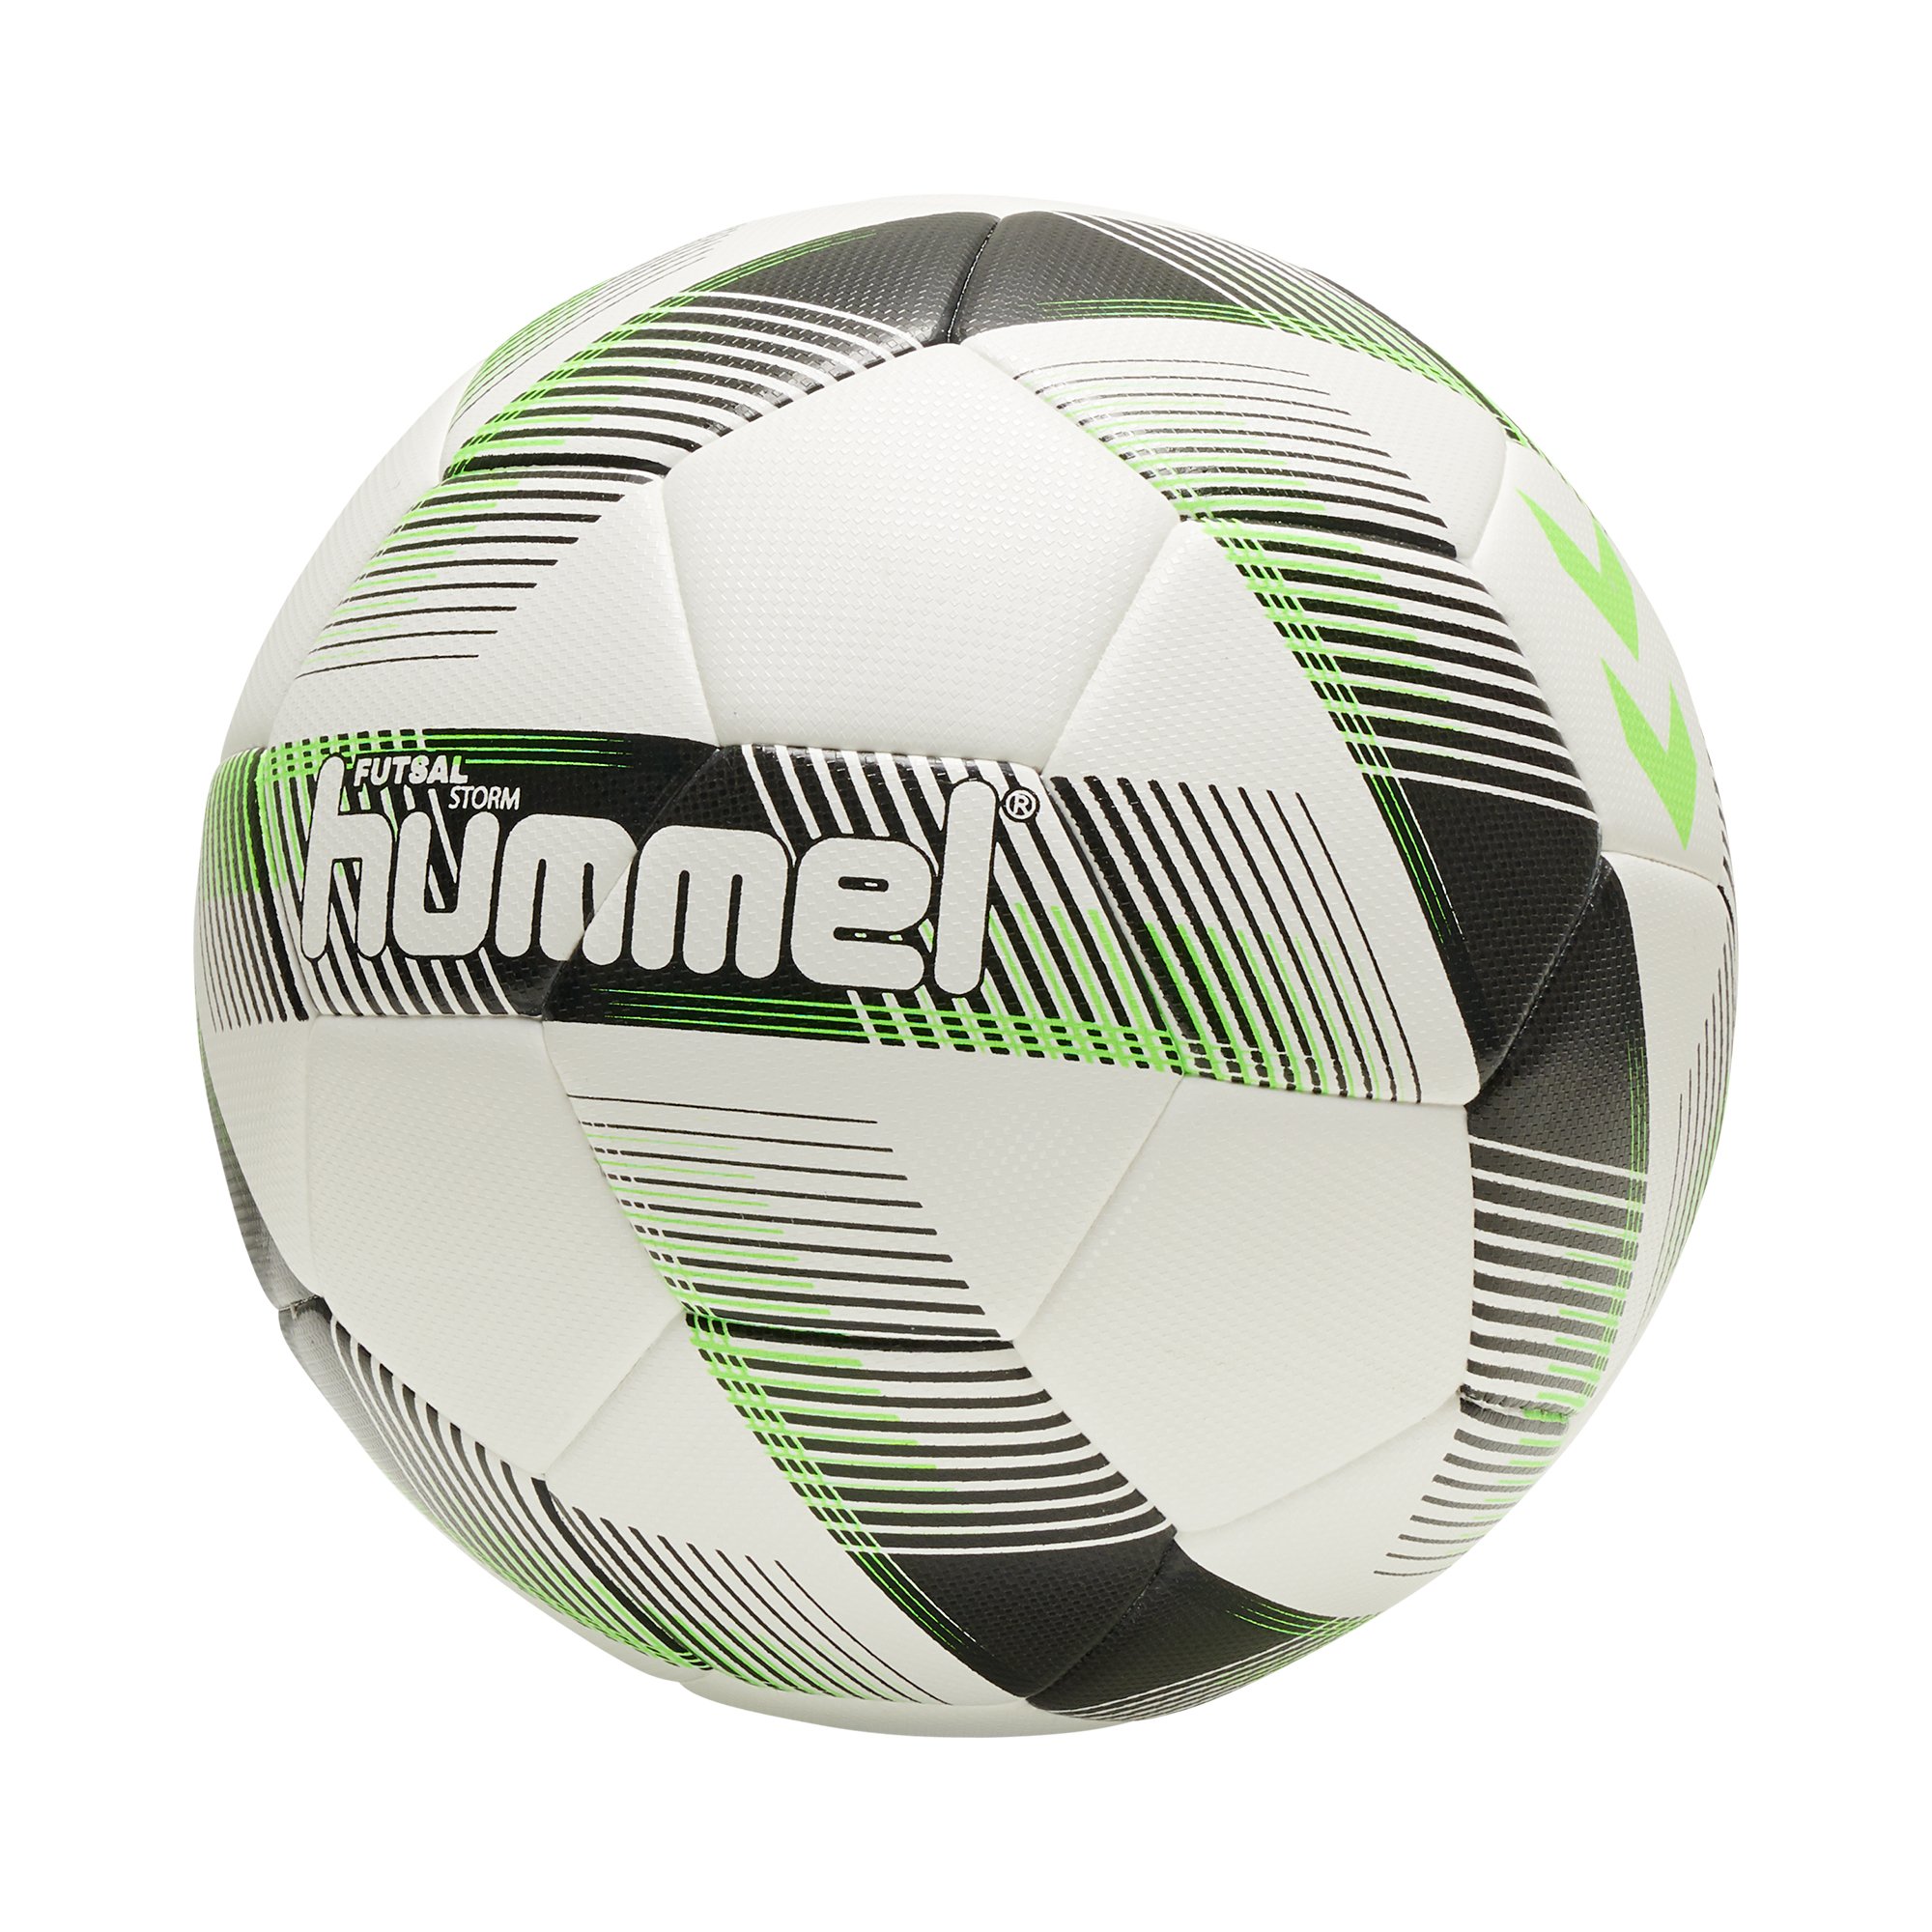 Hummel Futsal Storm Fußball